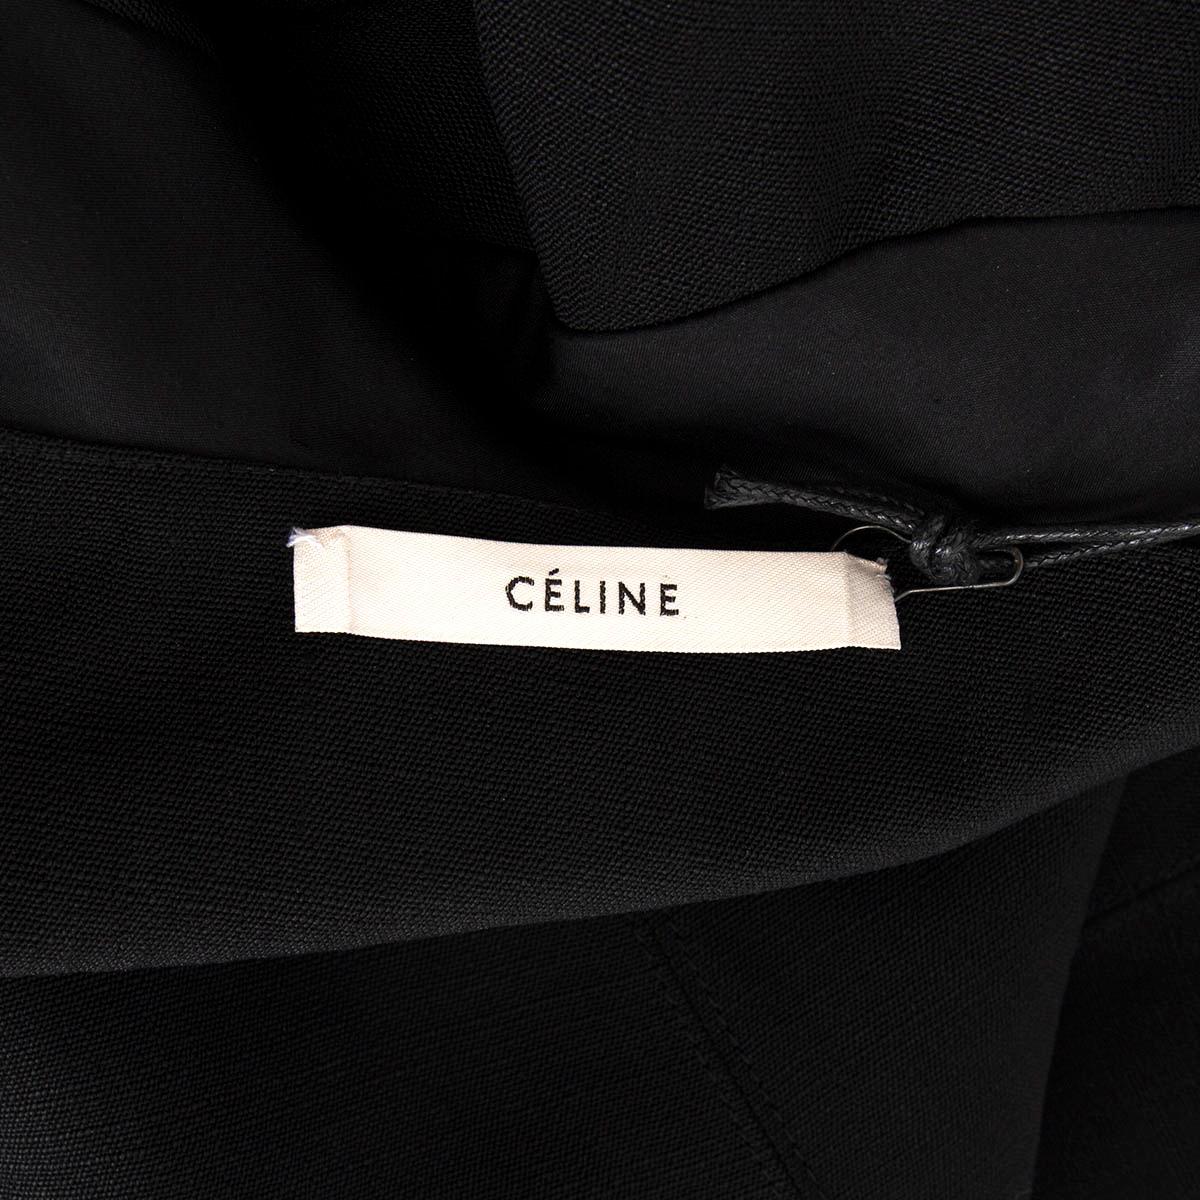 CELINE black viscose cAP SLEEVE TURTLENECK MIDI SHIFT Dress 38 S In New Condition For Sale In Zürich, CH